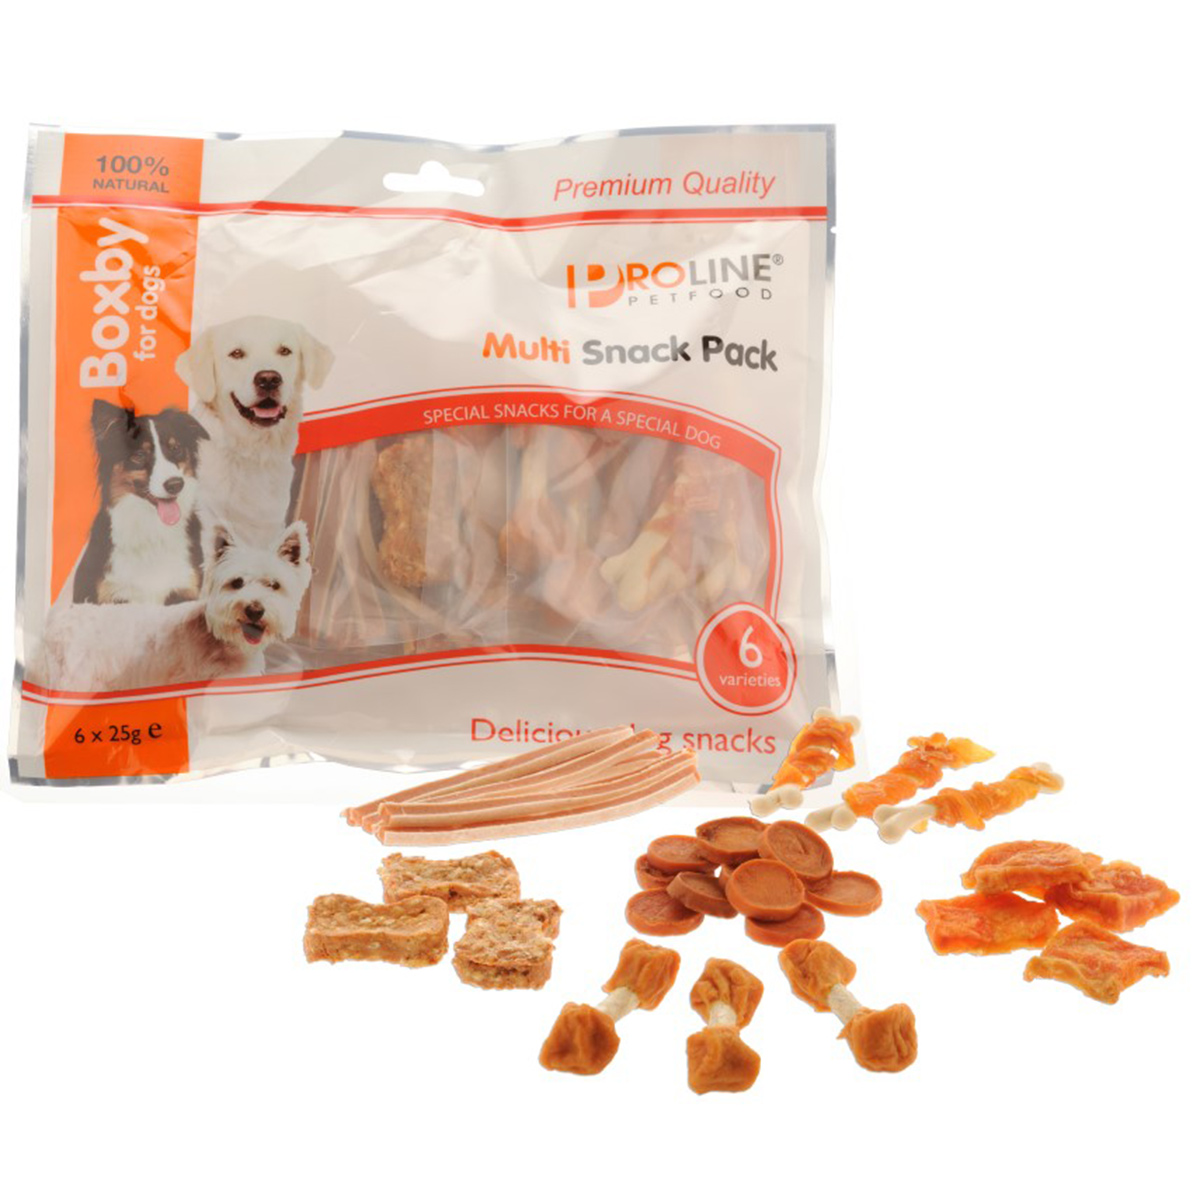 Proline Dog Pachet Multi Snack 6 x 25 g imagine